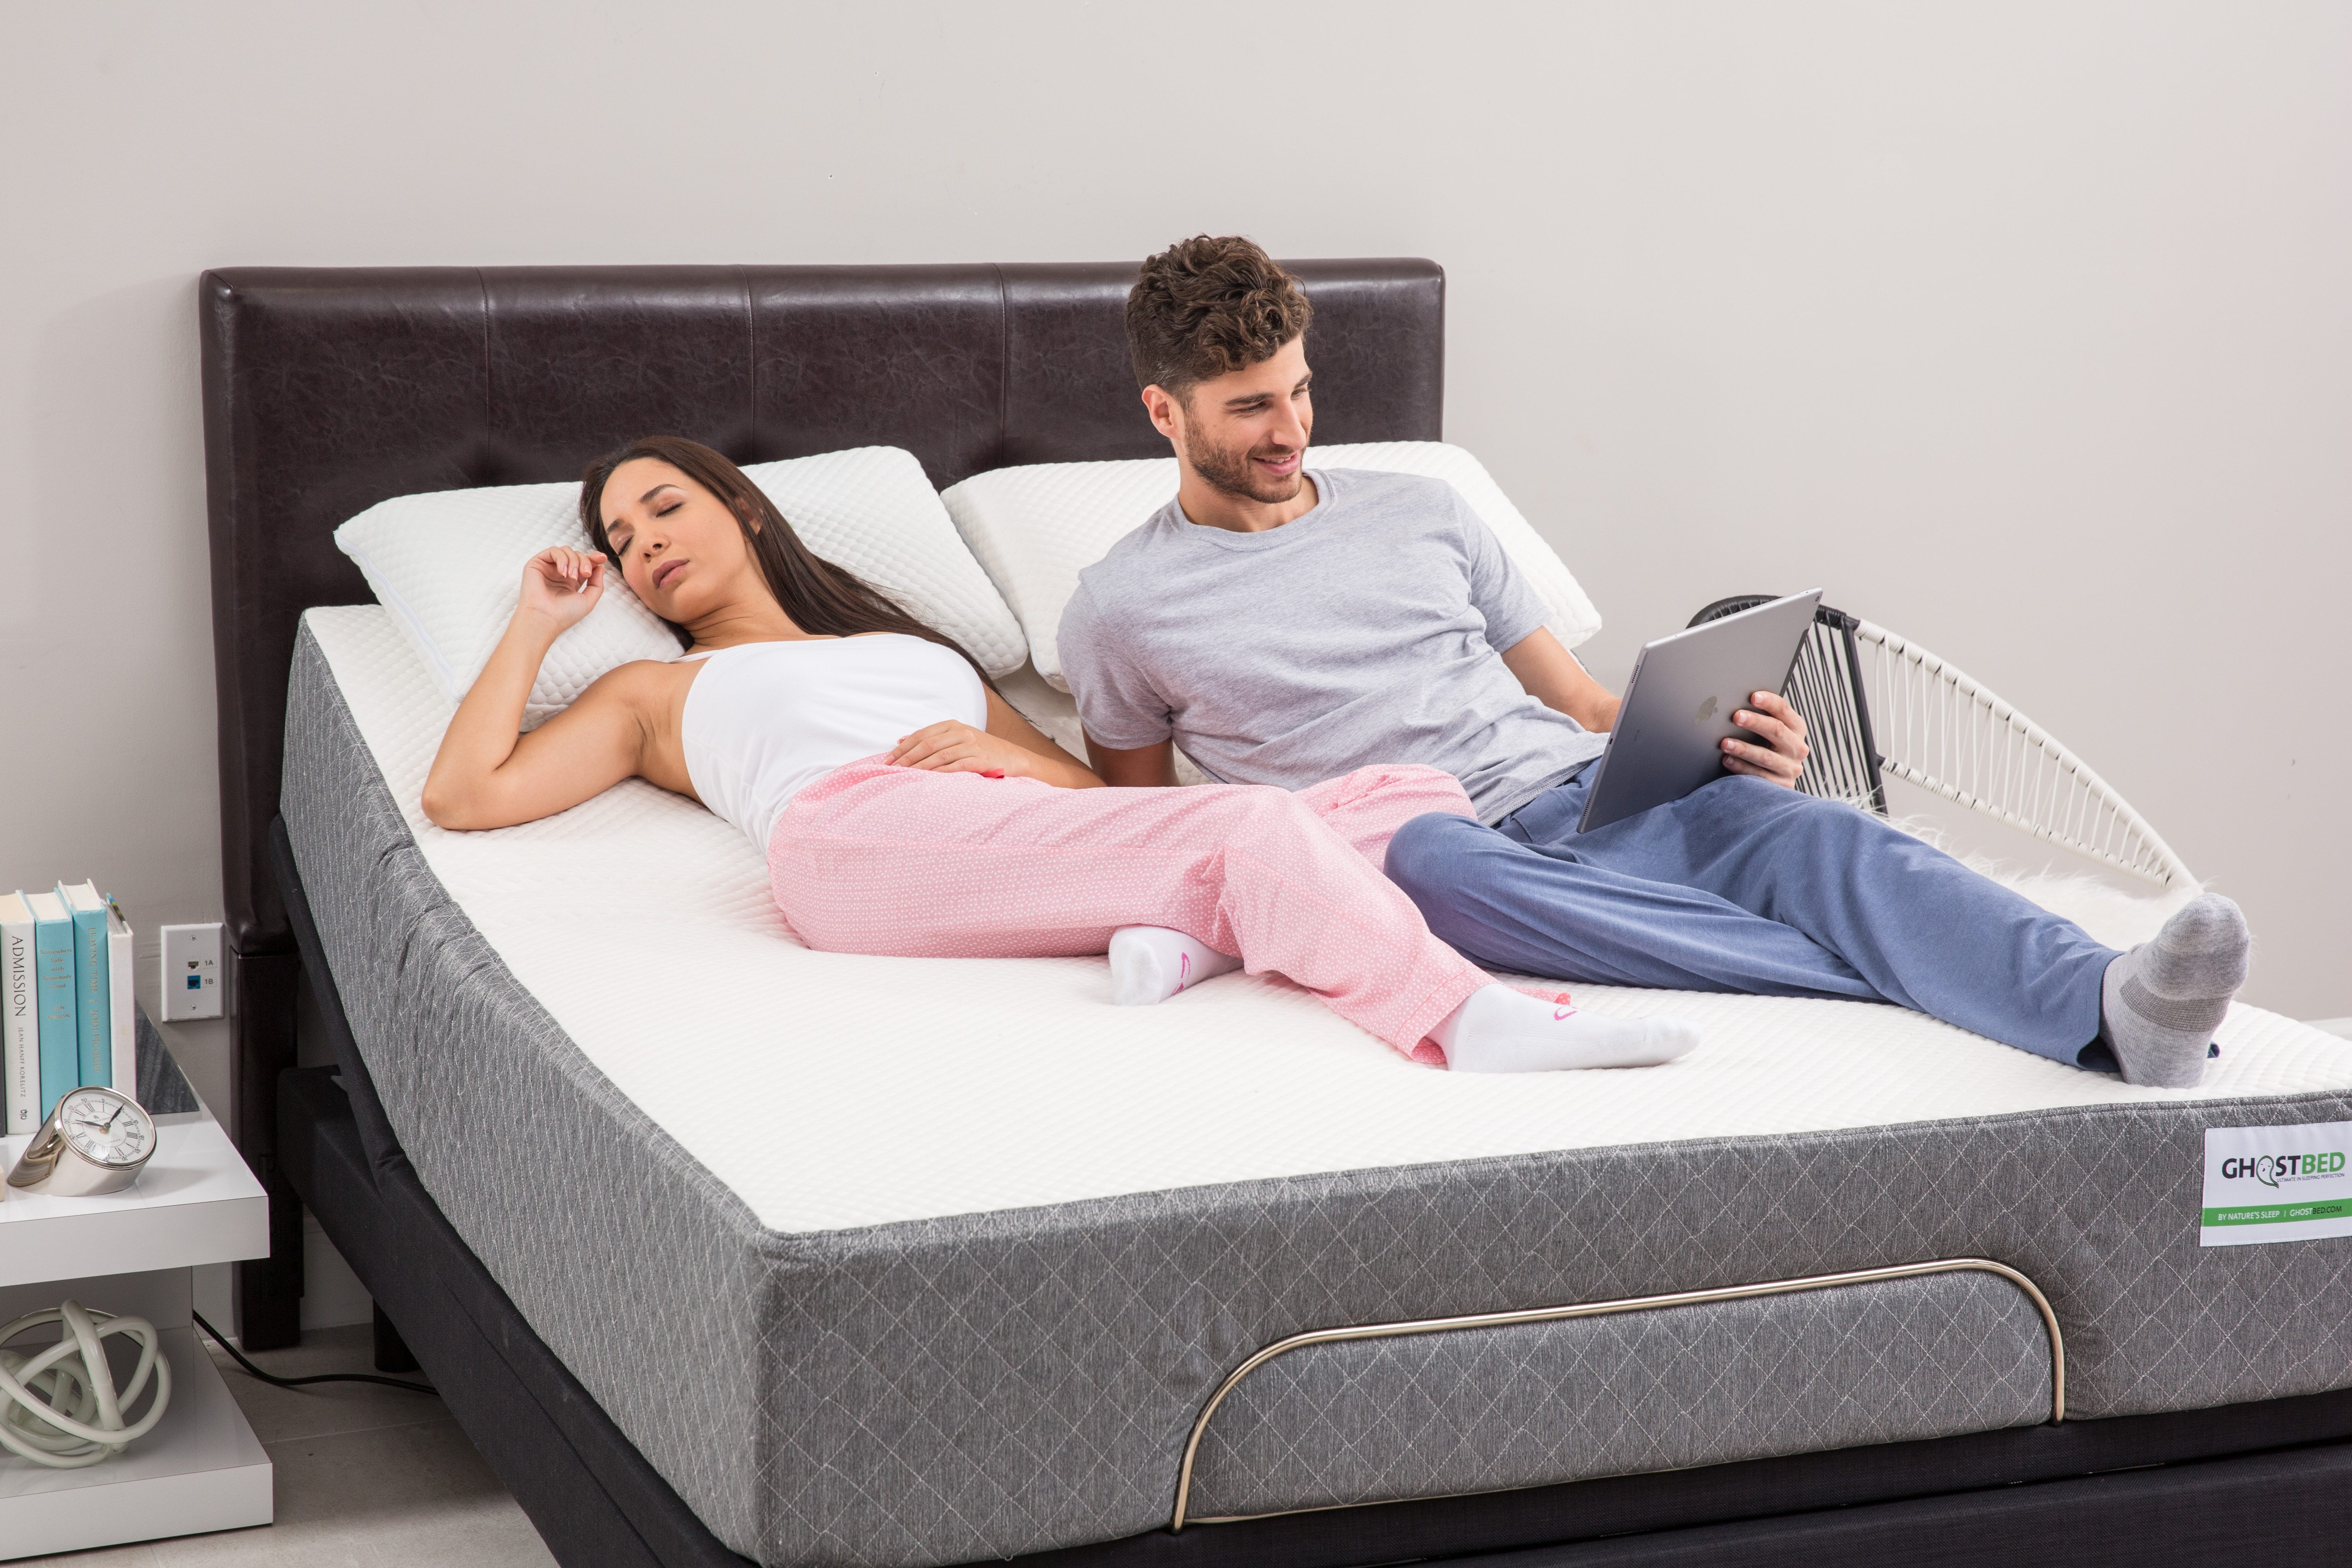 A high-quality mattress can help you relieve fibromyalgia symptoms as you sleep